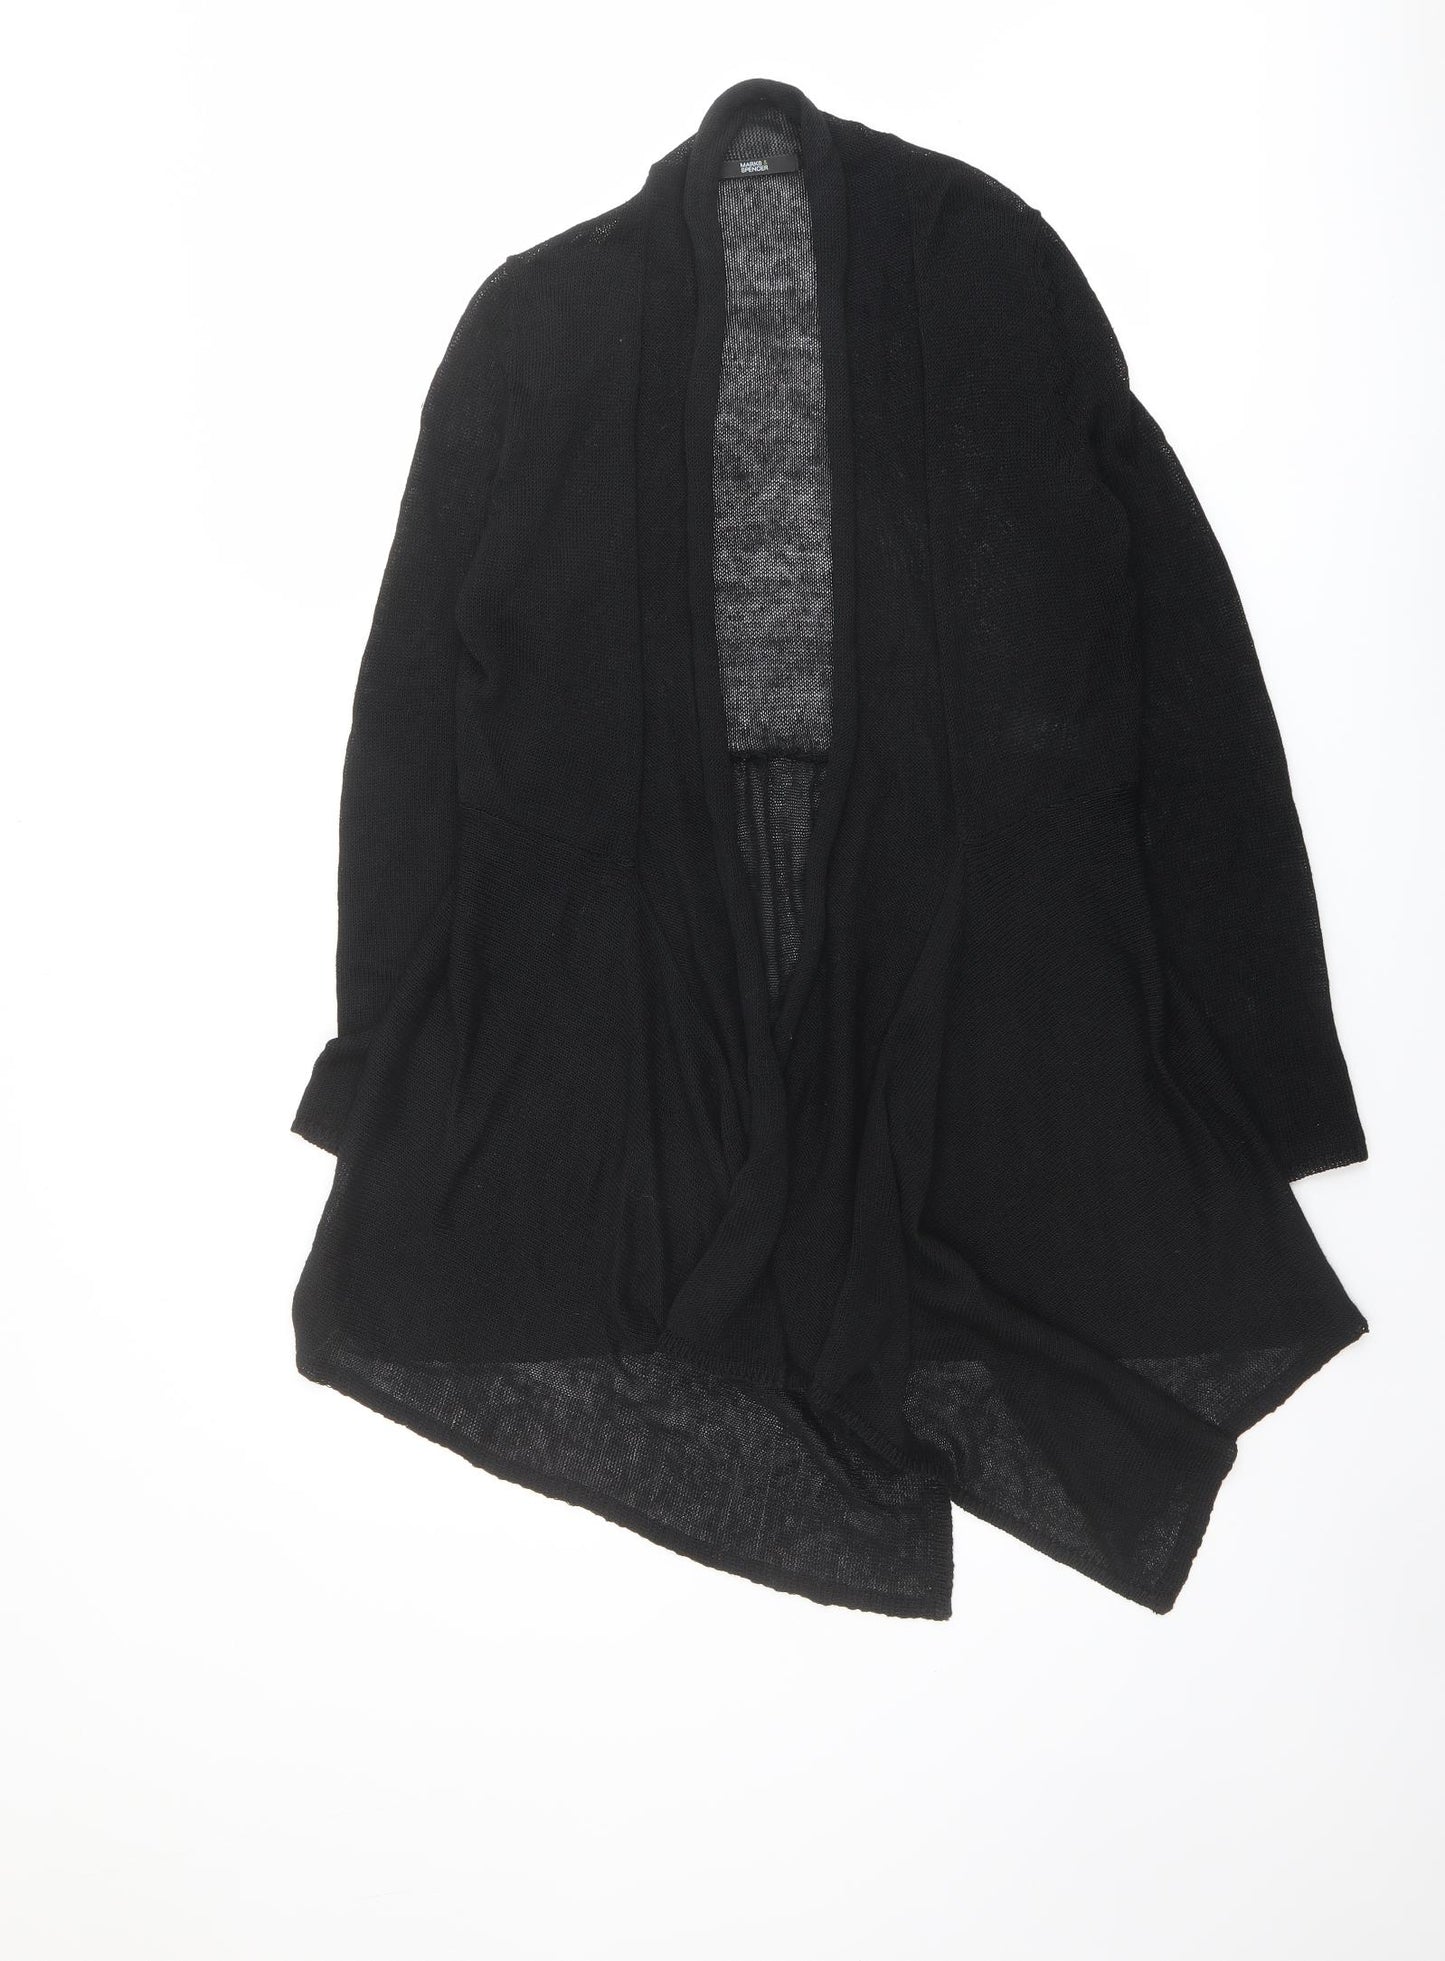 Marks and Spencer Womens Black V-Neck Linen Cardigan Jumper Size 10 - Waterfall design